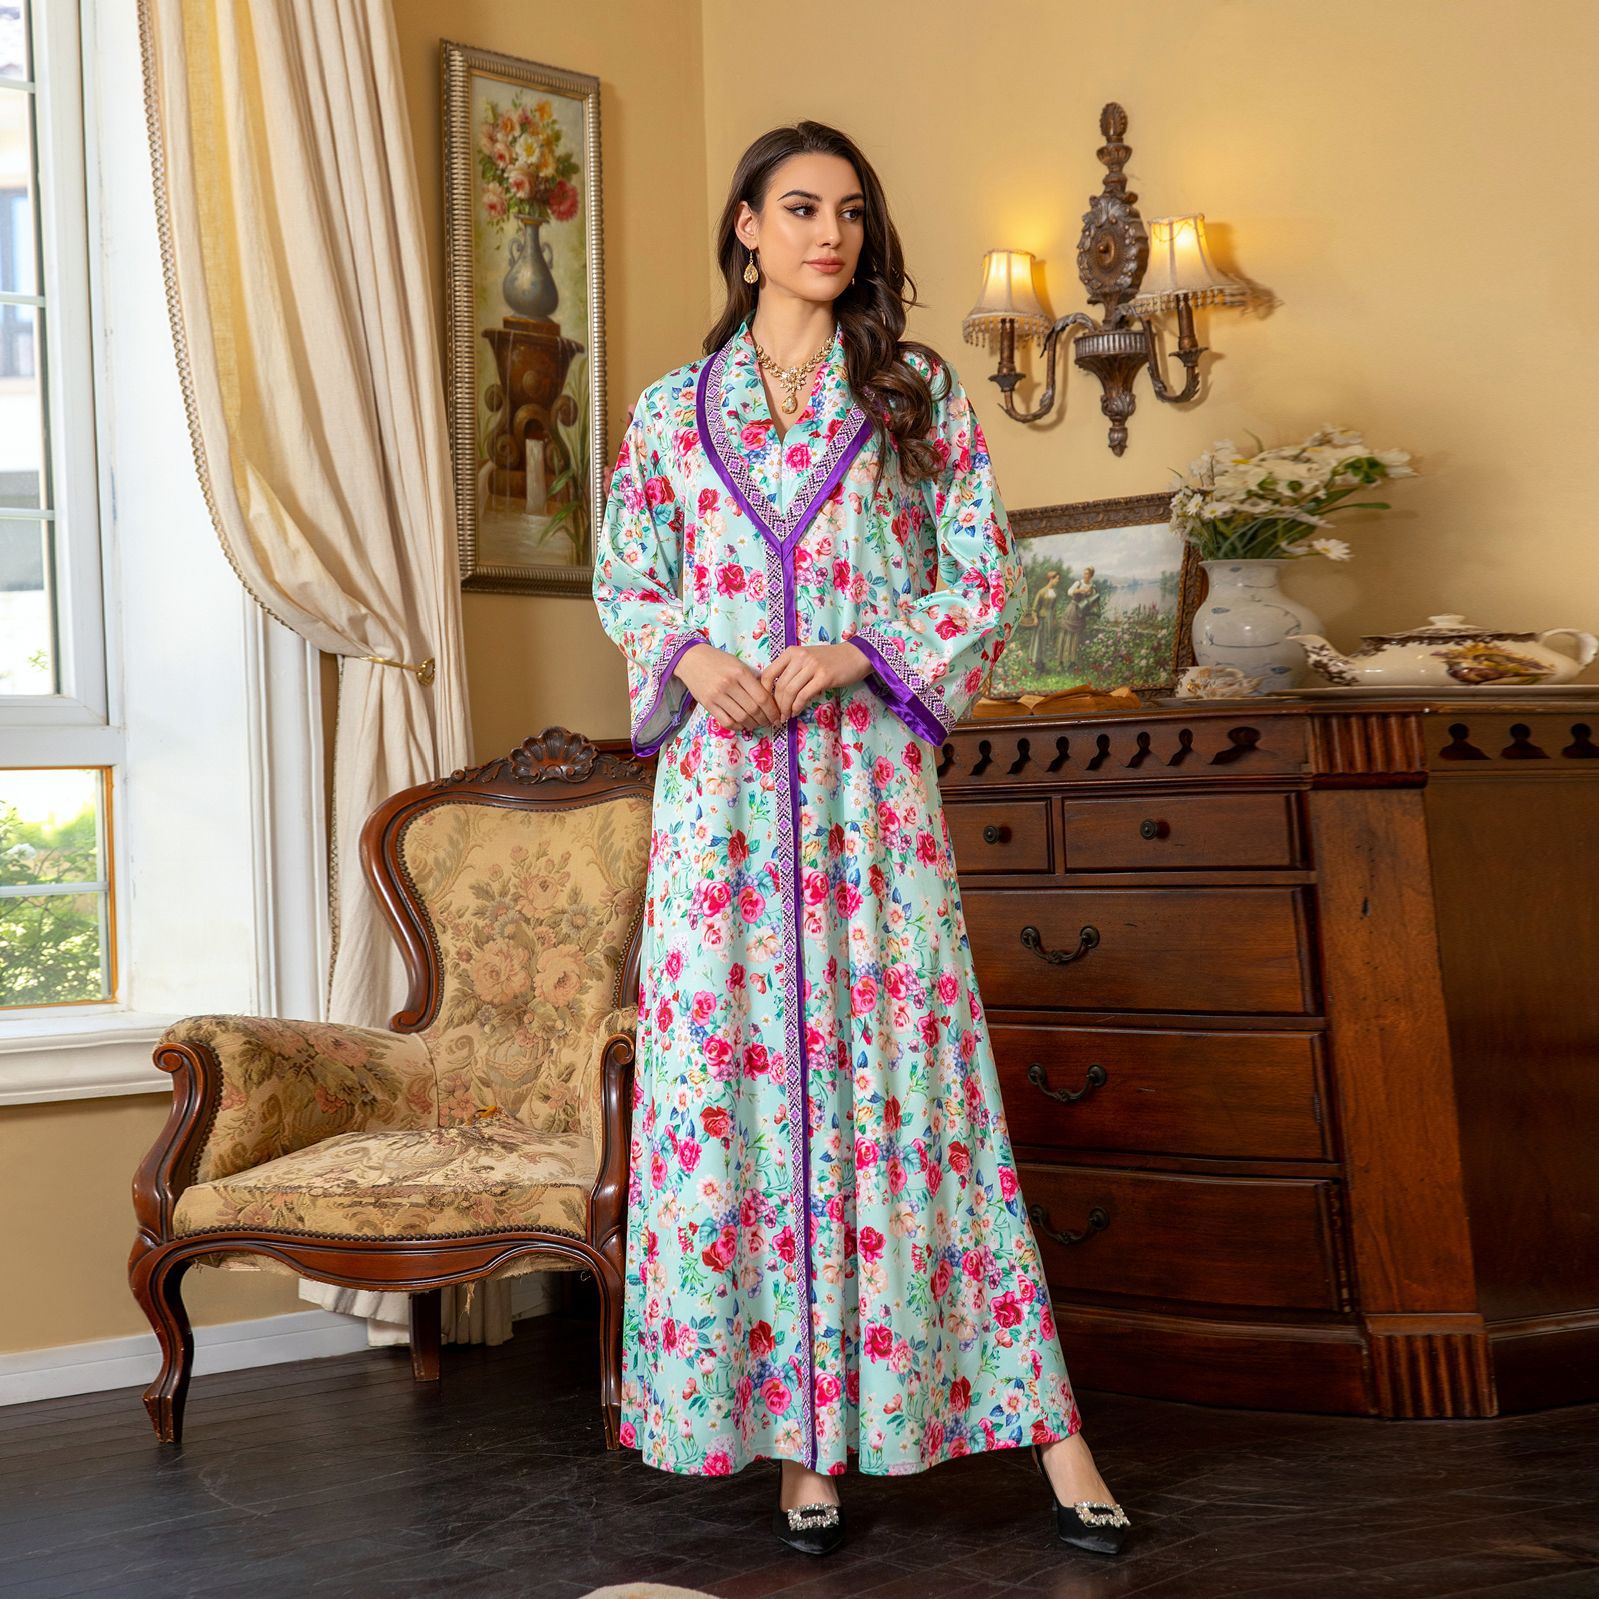 Spring New Muslim Women's Arabic Fashion Printed Diamond Dress